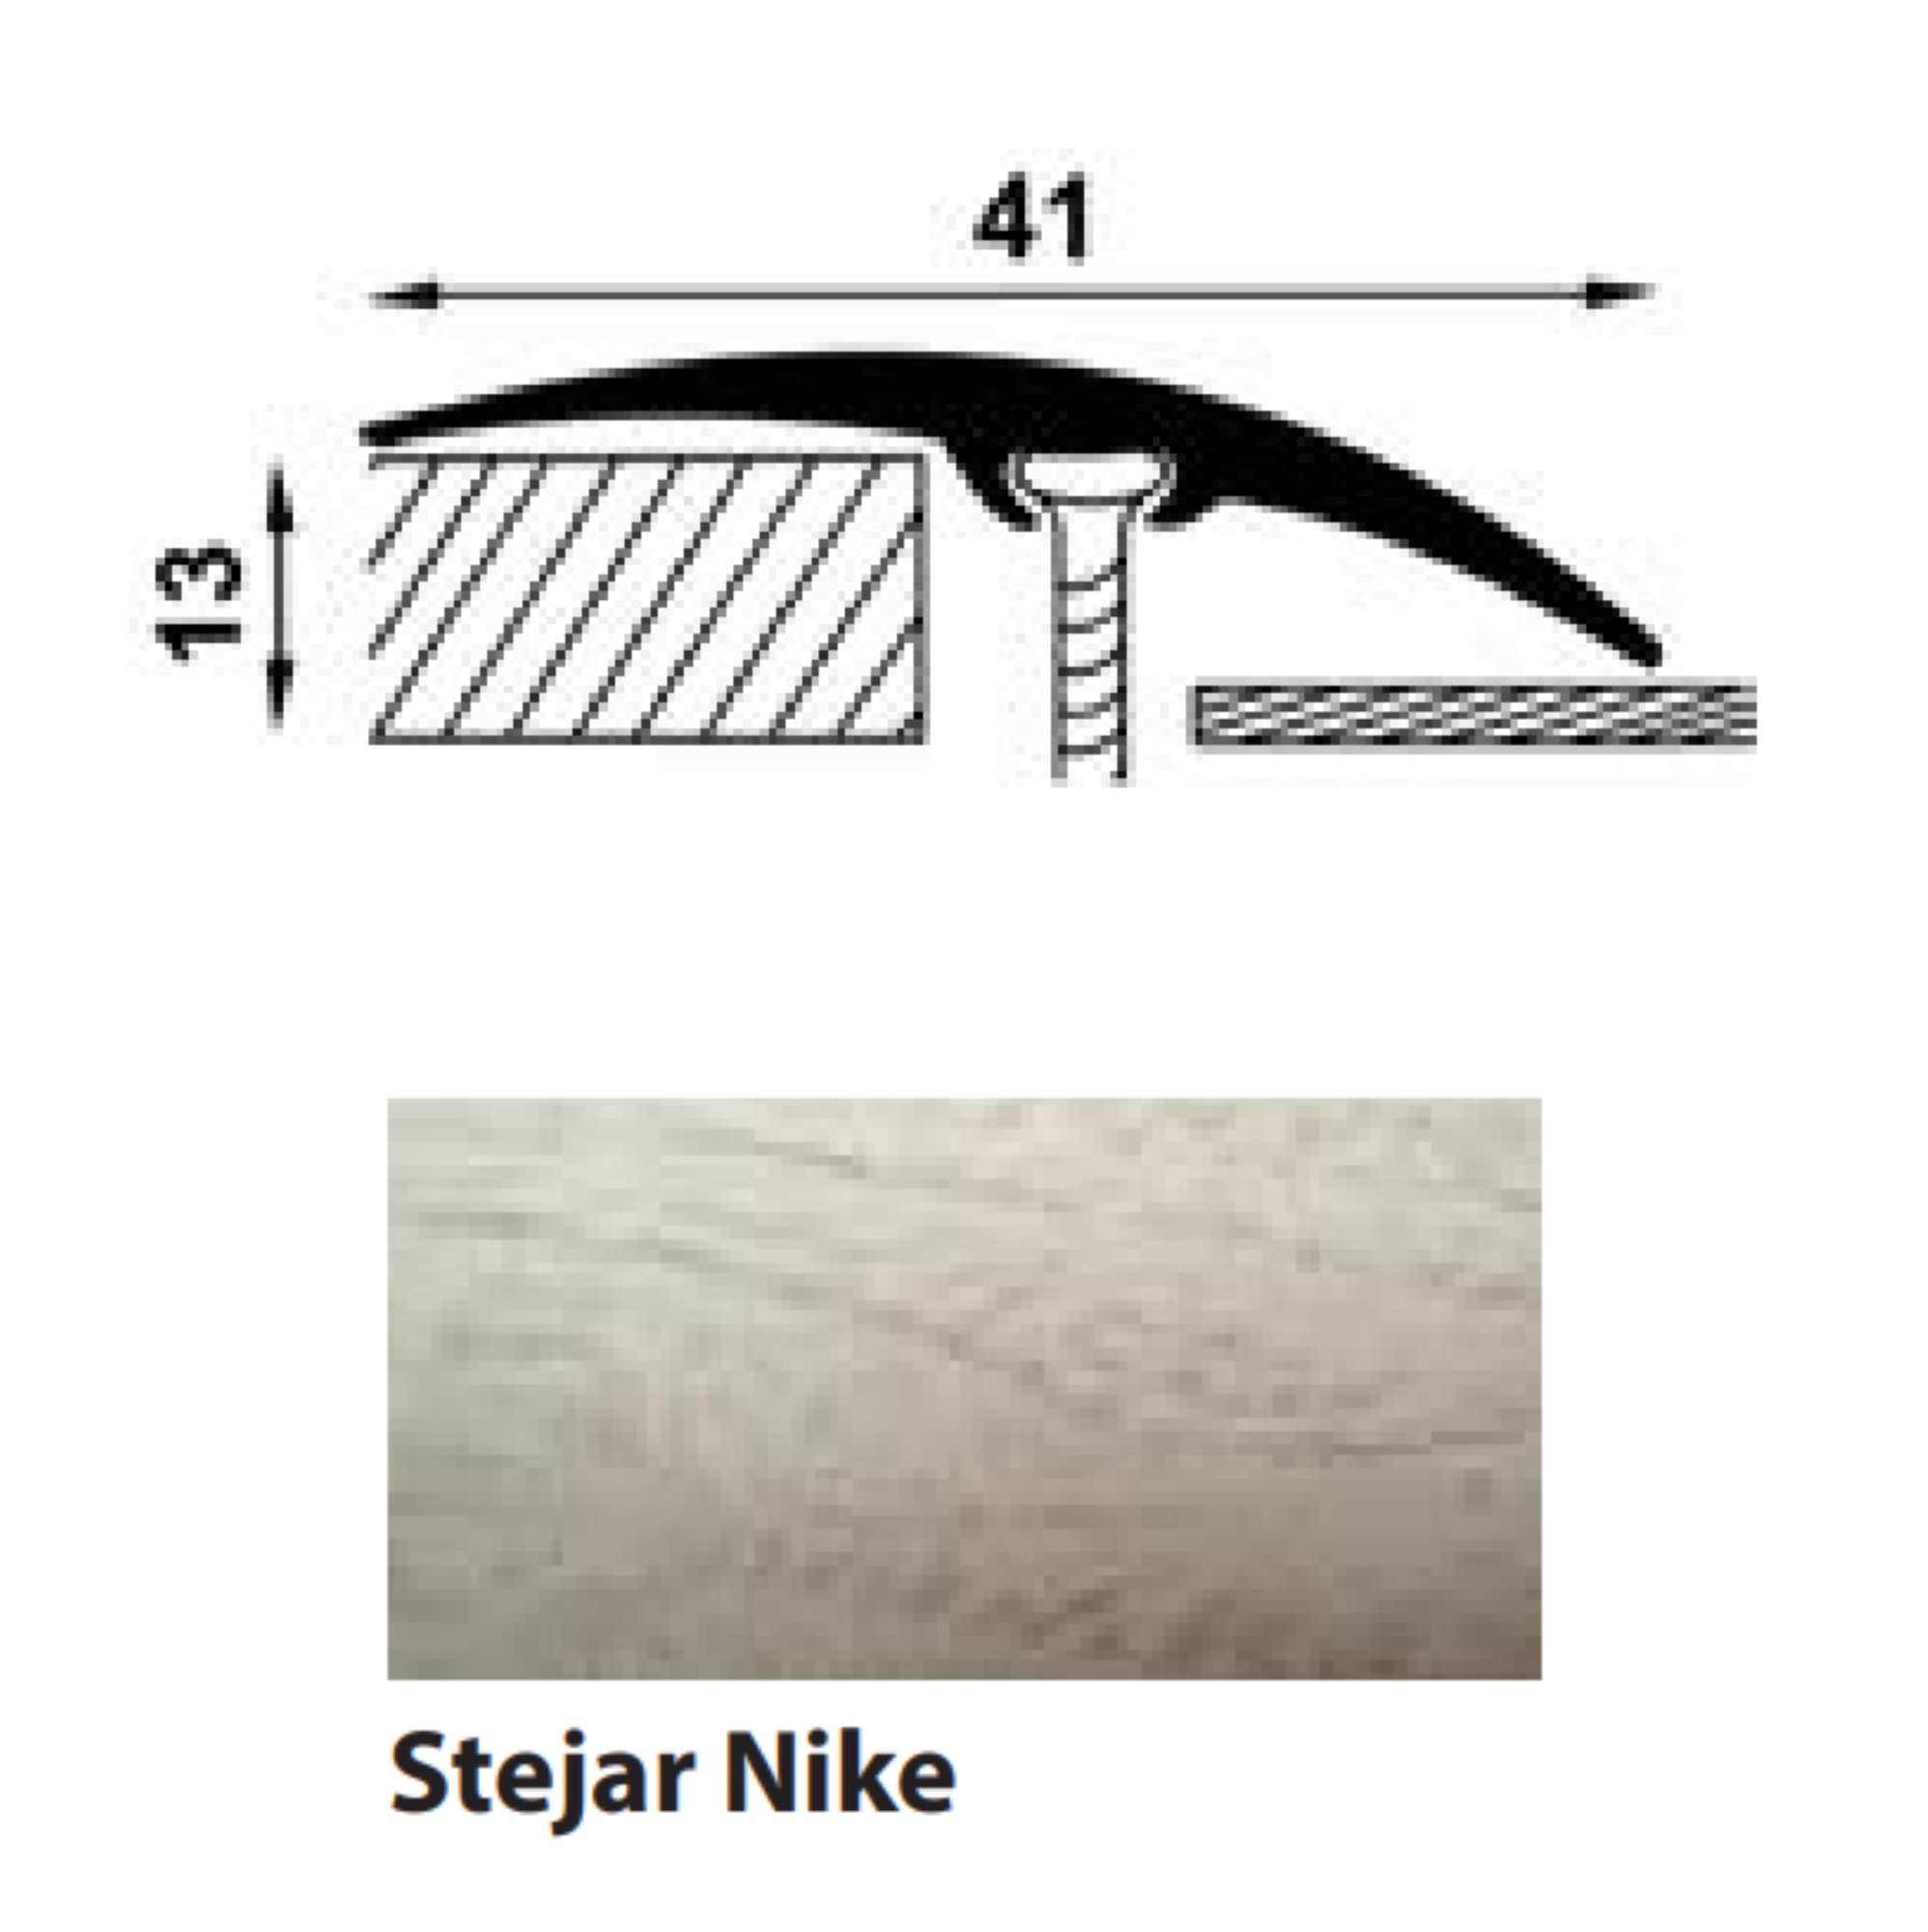 Profile de trecere - Profil aluminiu de trecere, cu surub ascuns, PM72607, stejar nike, 900 x 41 mm, profiline.ro